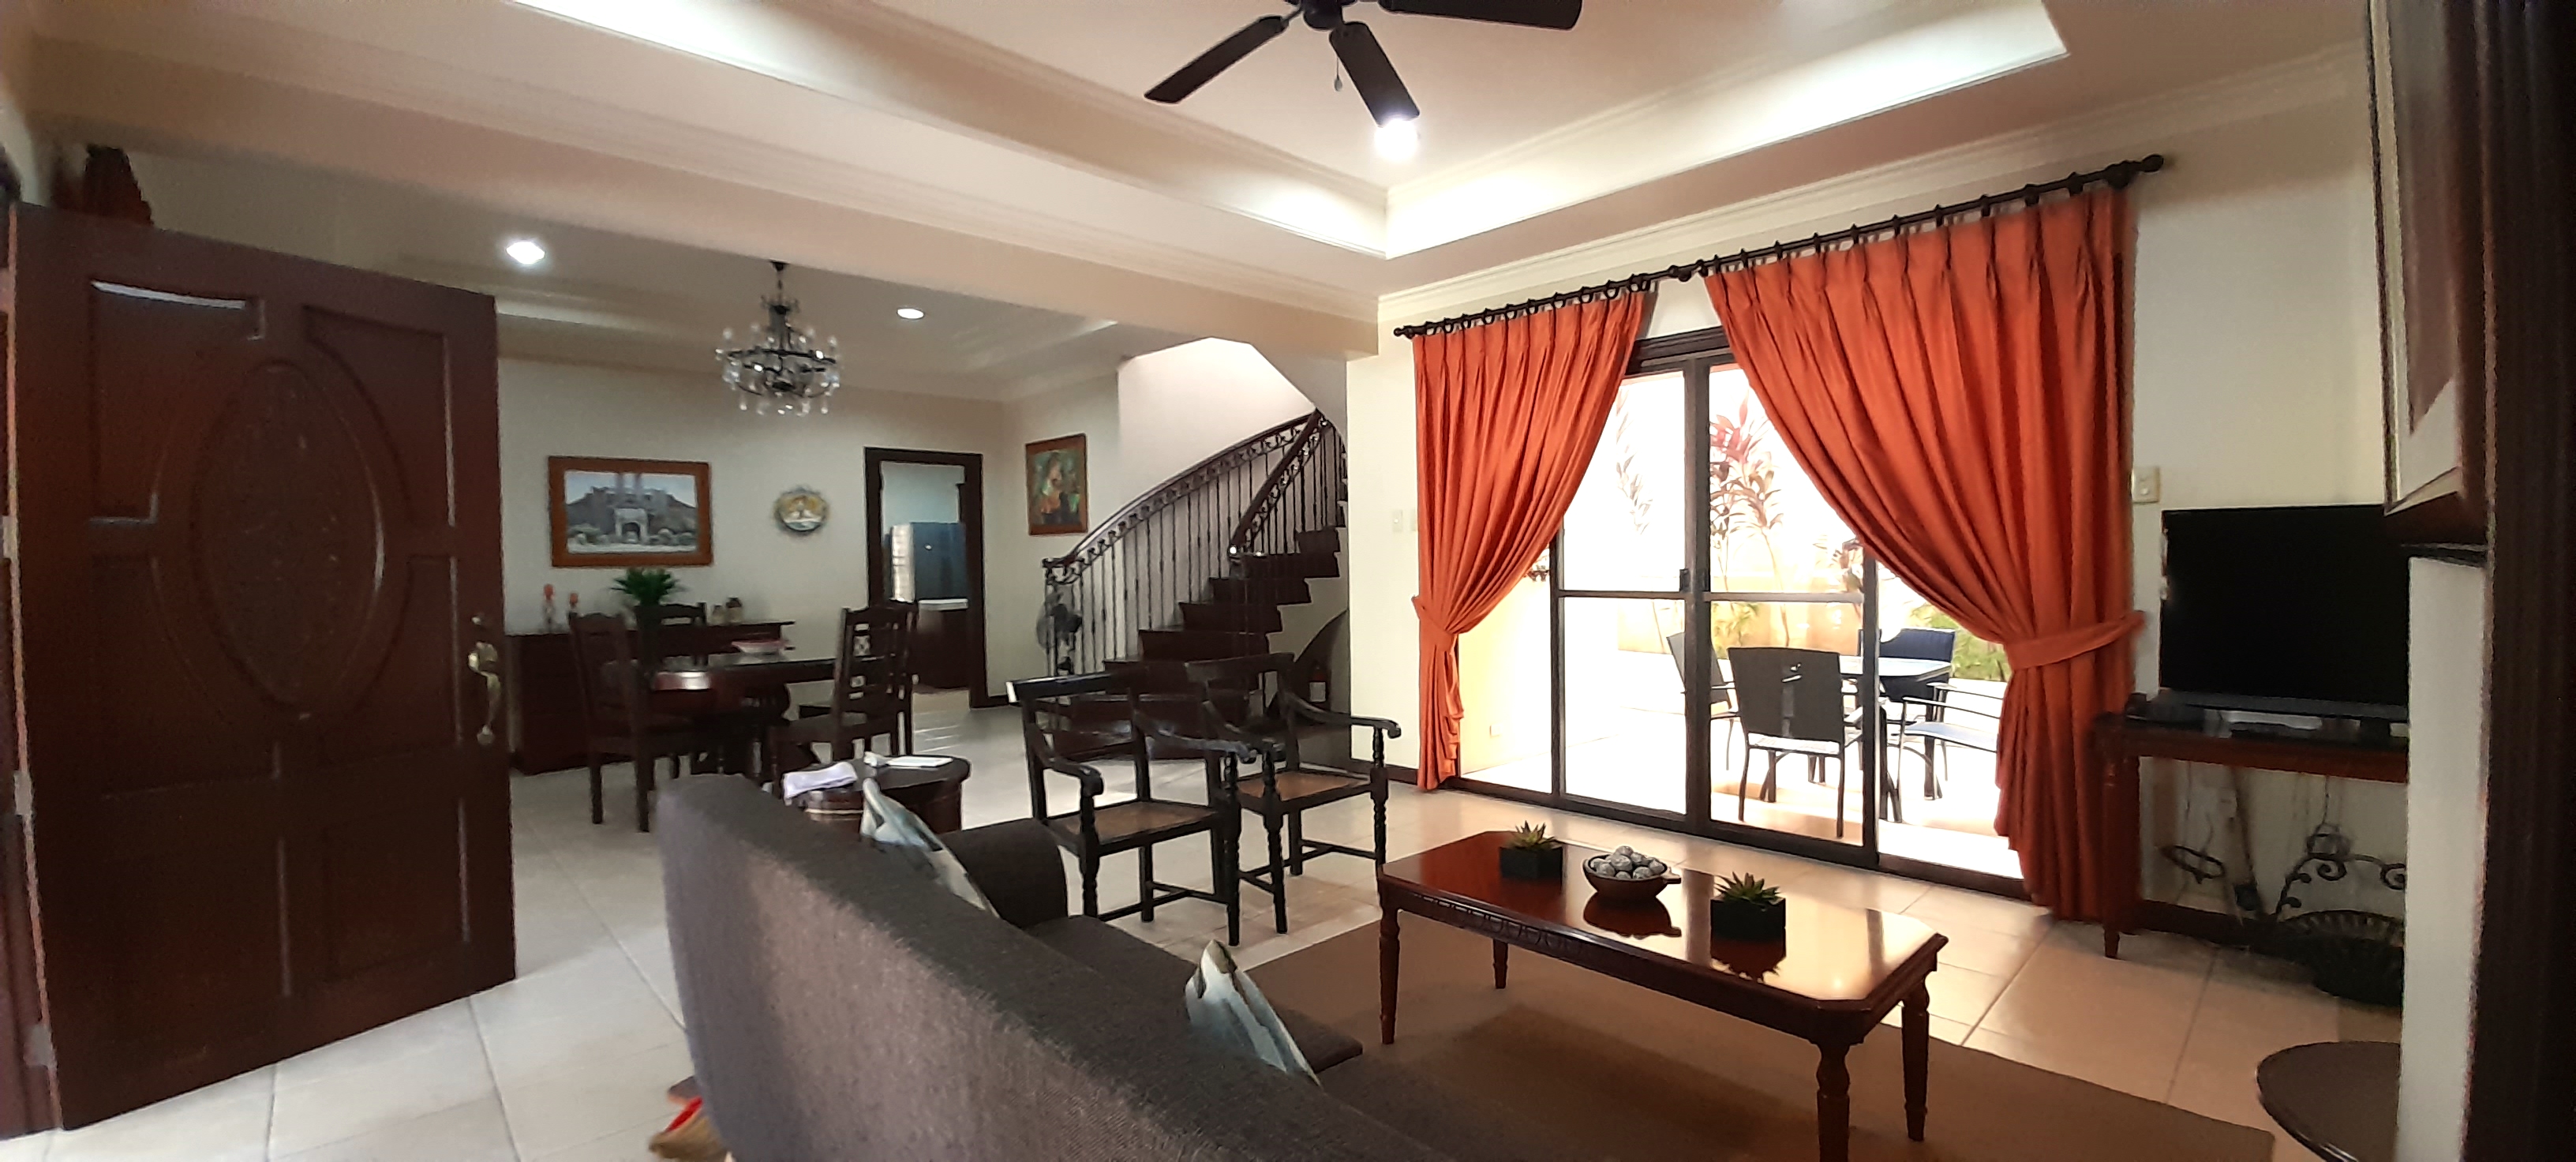 3-bedroom-furnished-house-with-swimming-pool-in-banilad-cebu-city-cebu